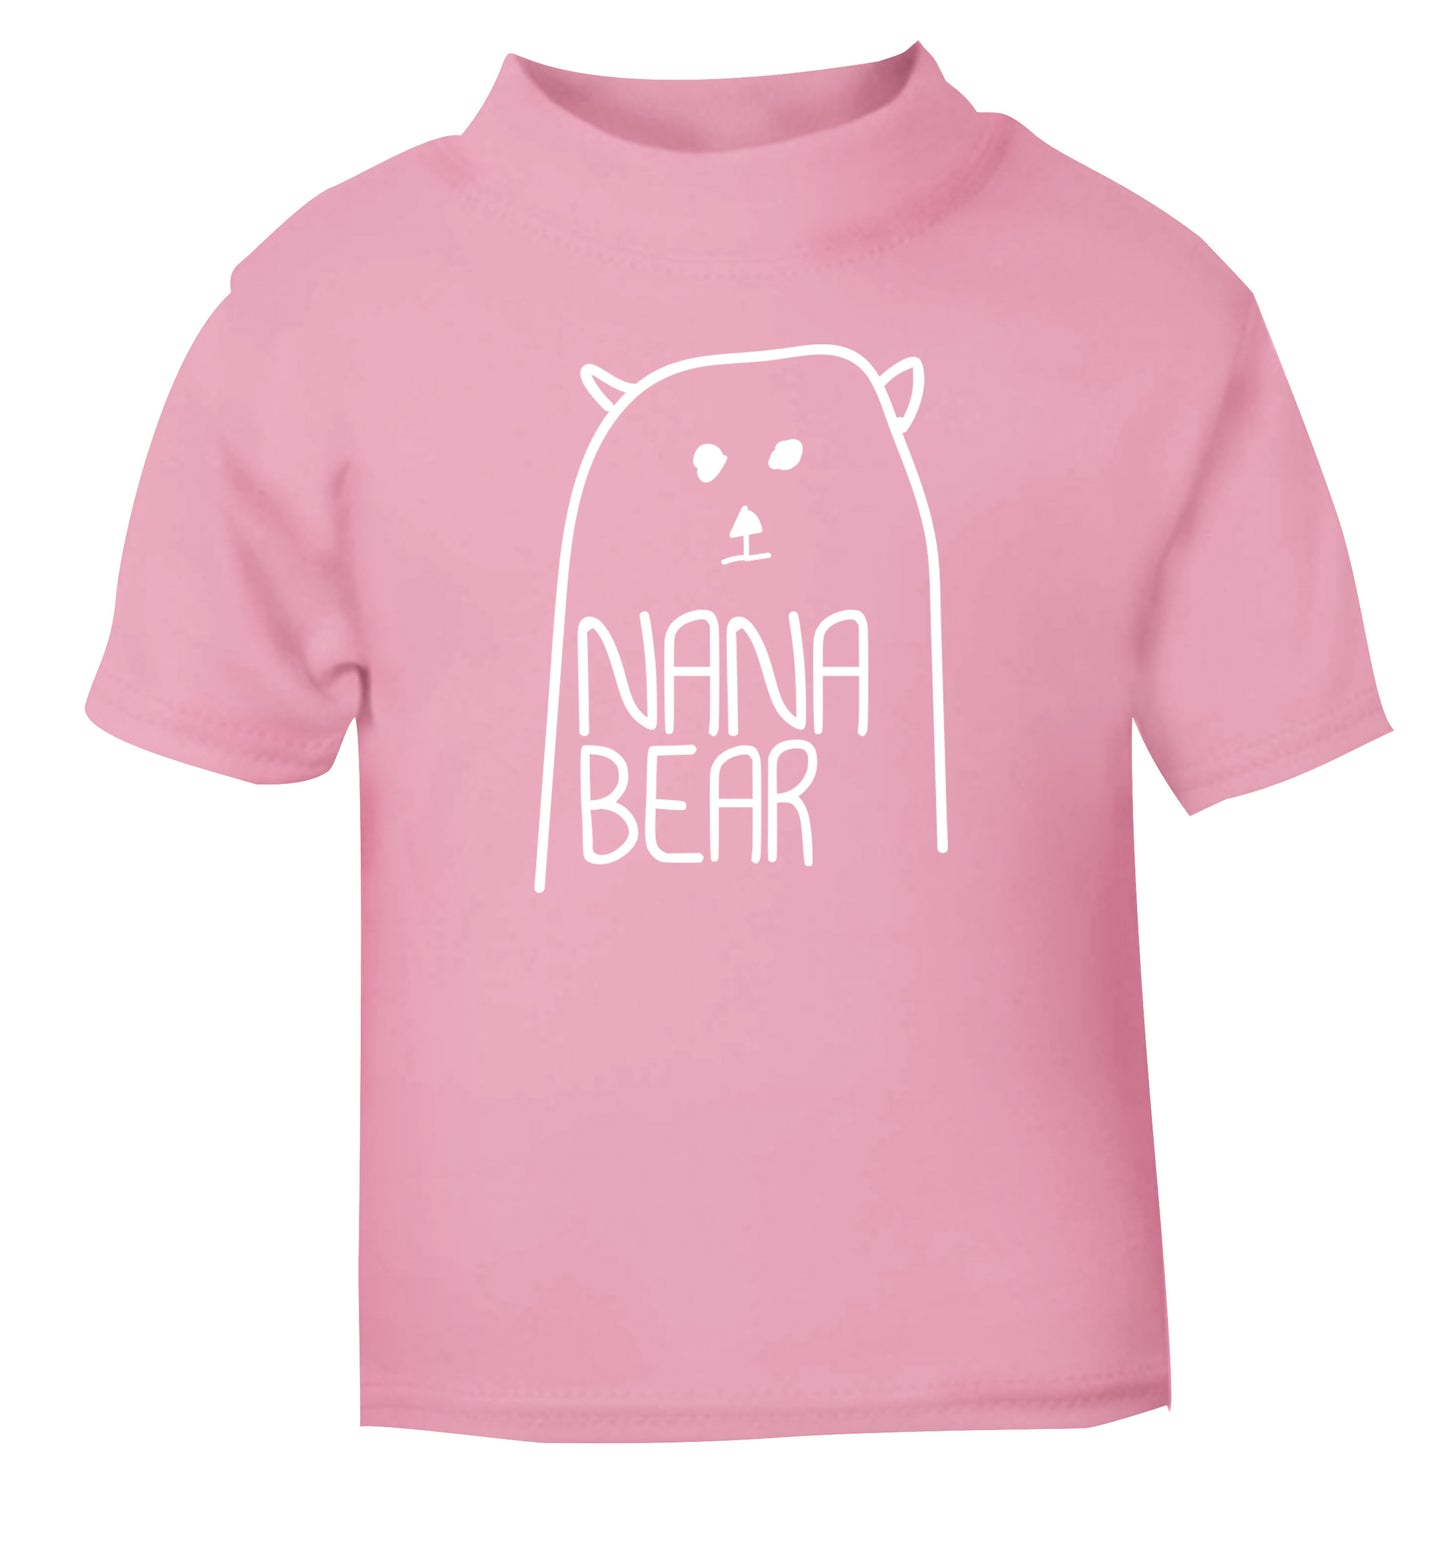 Nana bear light pink Baby Toddler Tshirt 2 Years